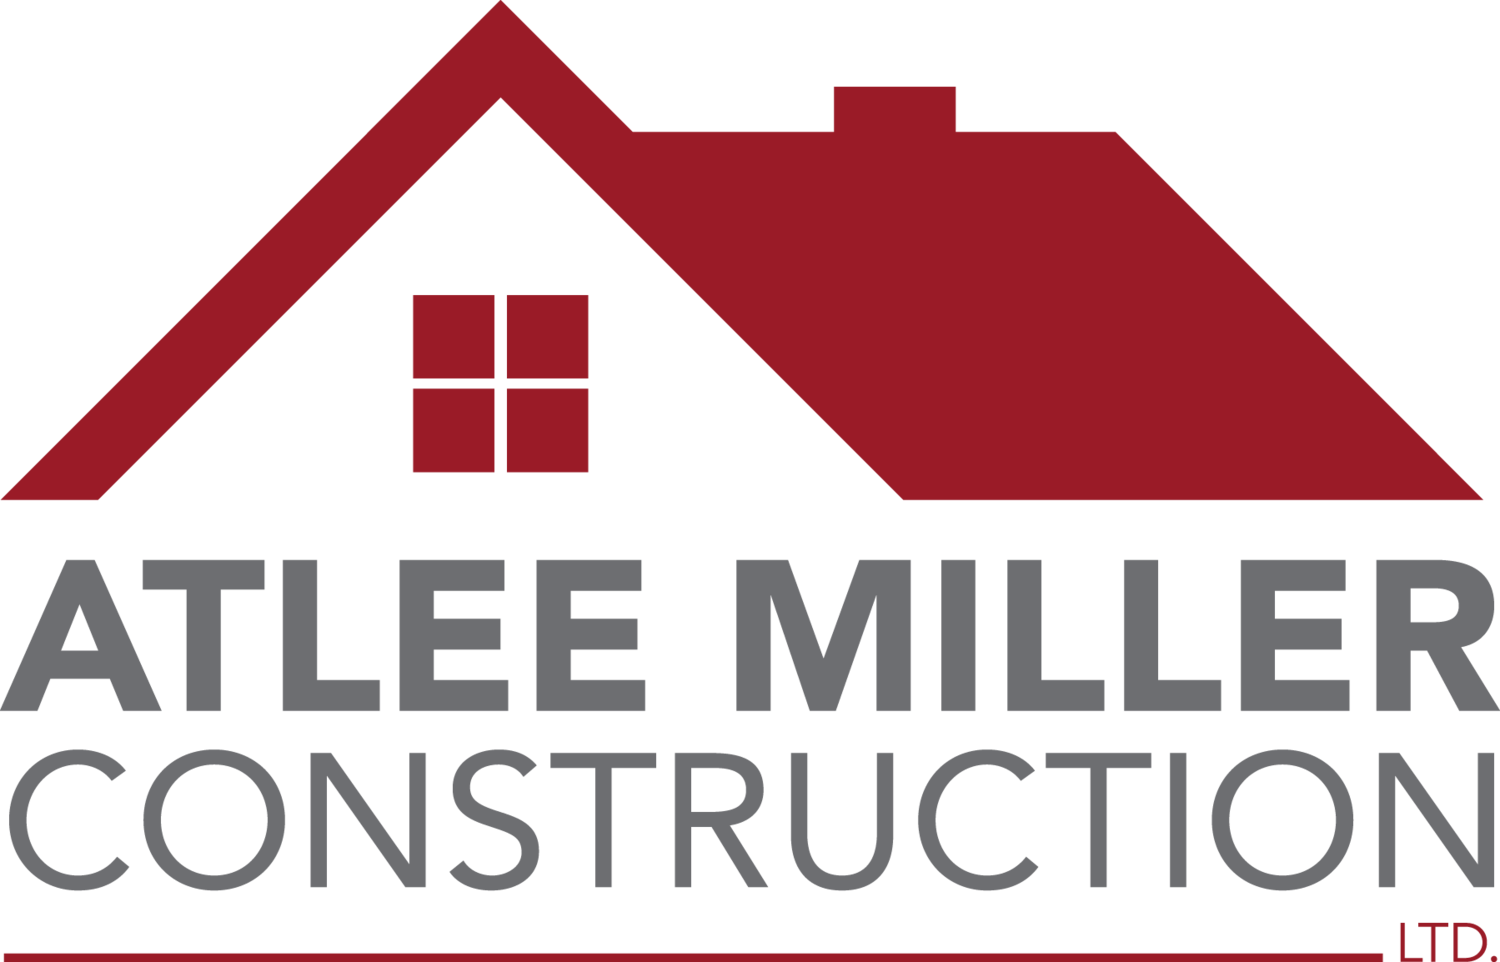 Atlee Miller Construction LTD.